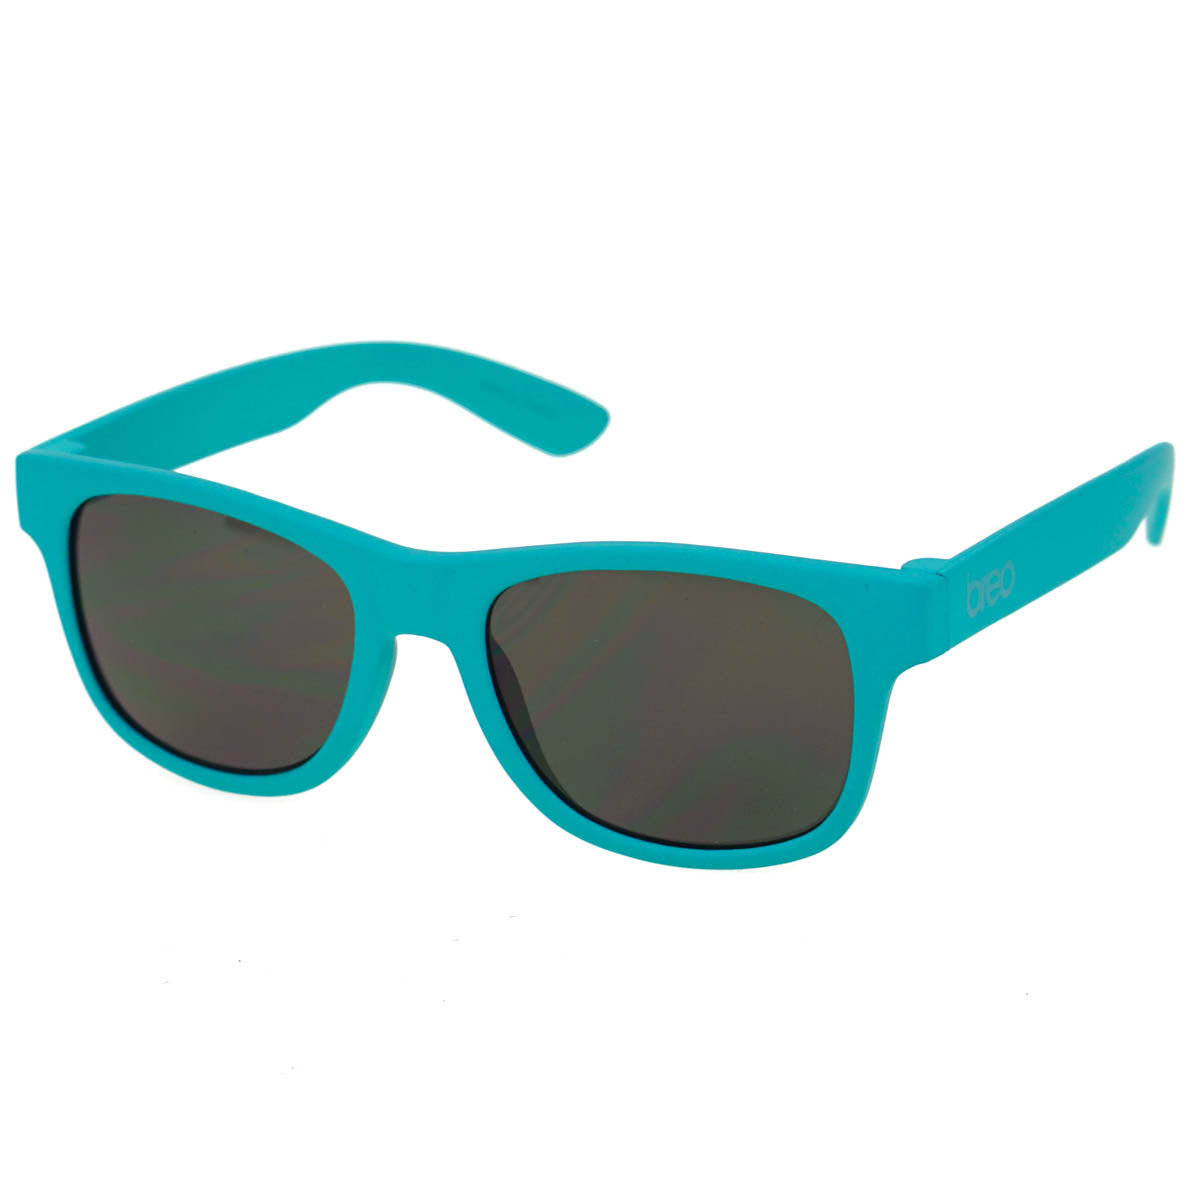 x 2 Breo Uptone Junior Aqua Sunglasses